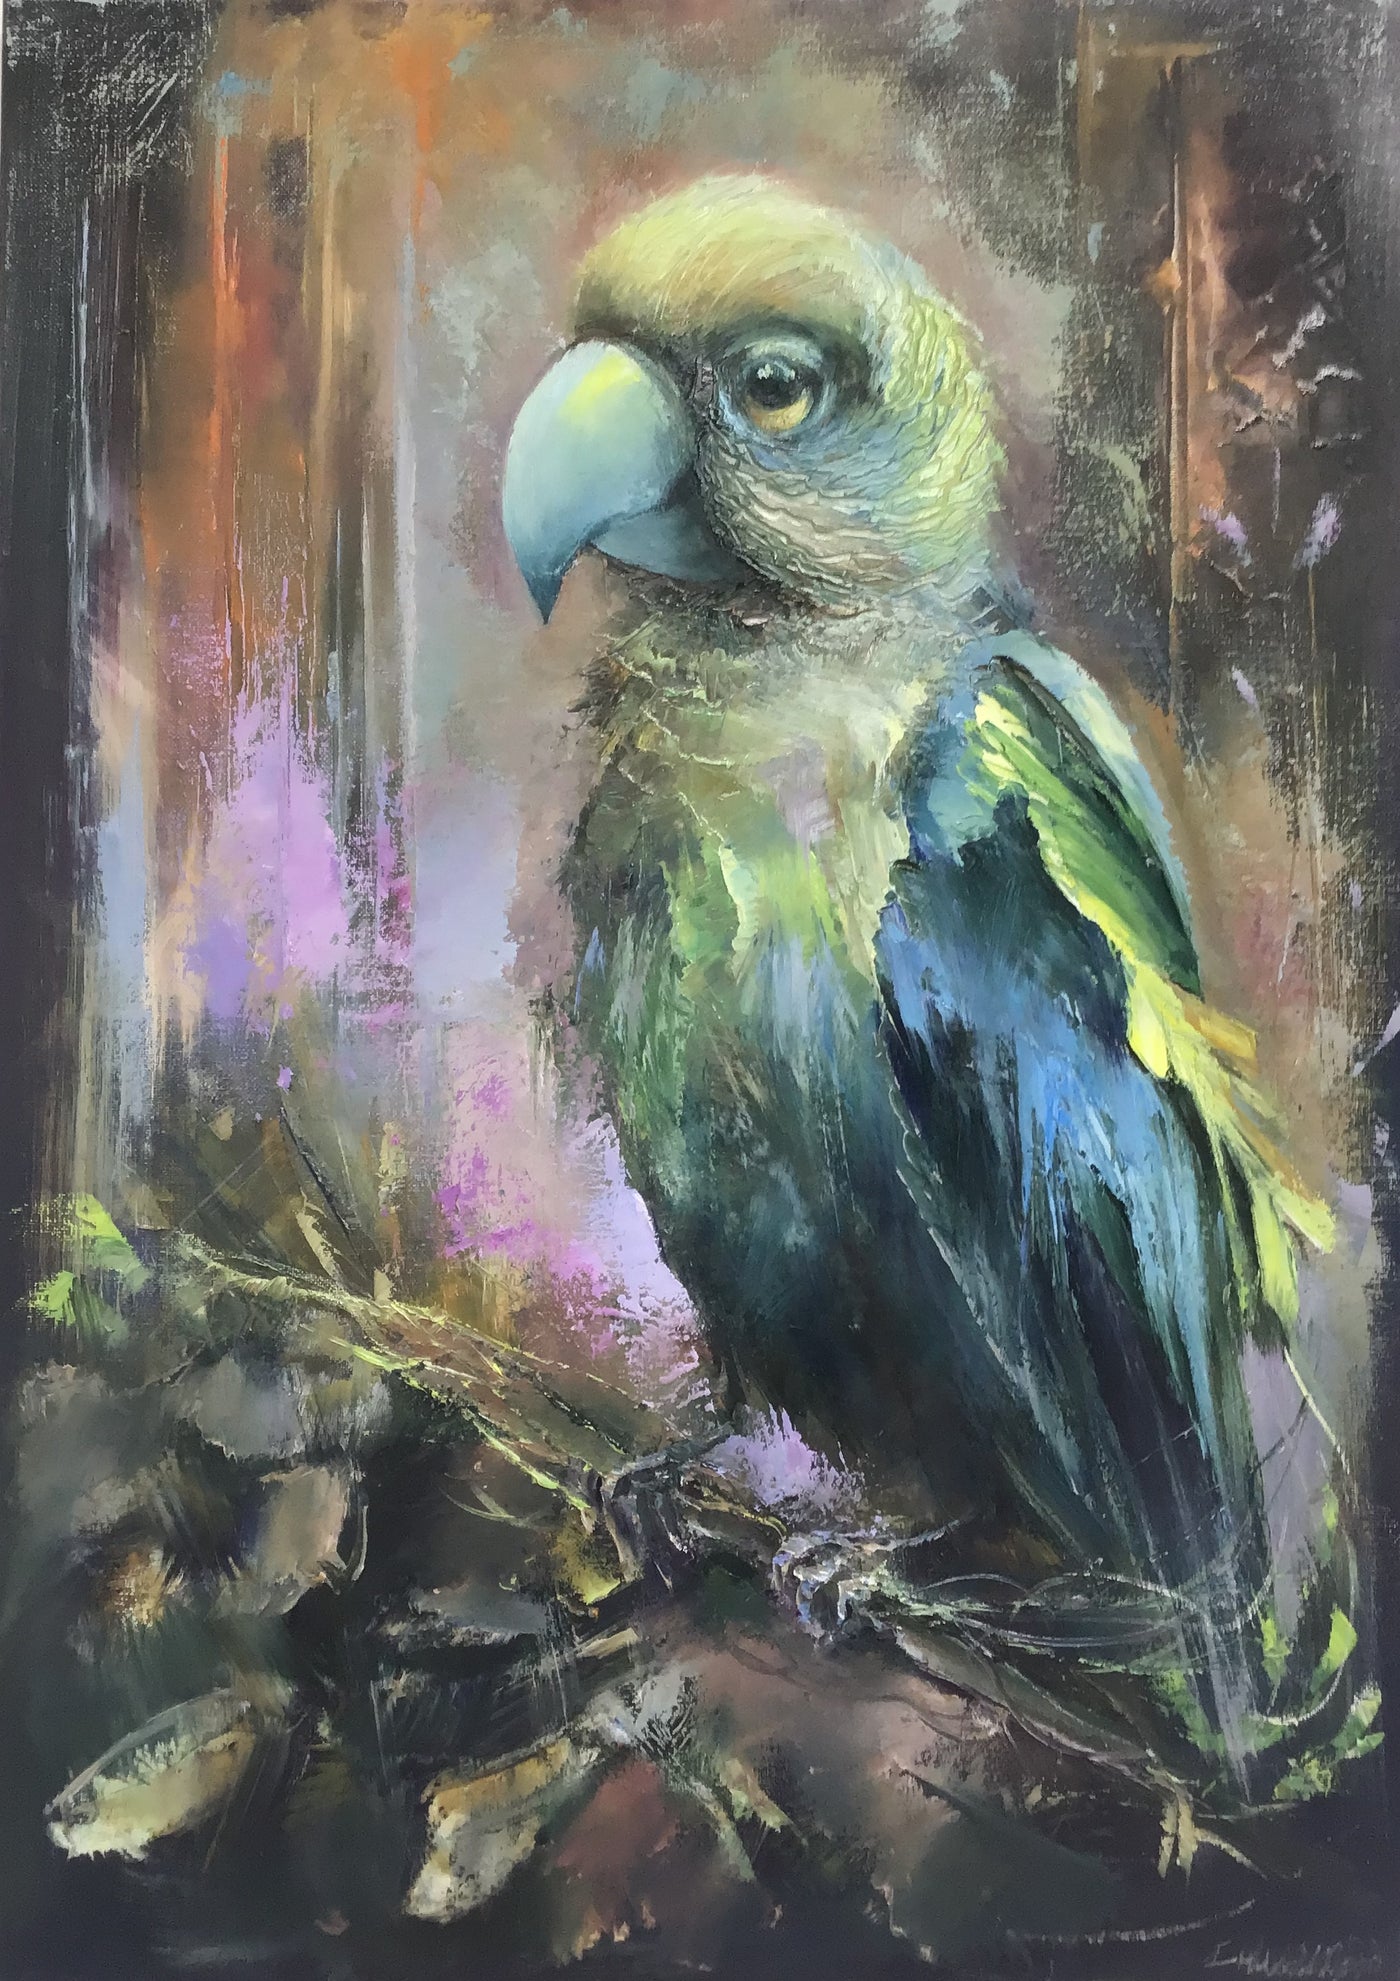 Beaky The Parrot